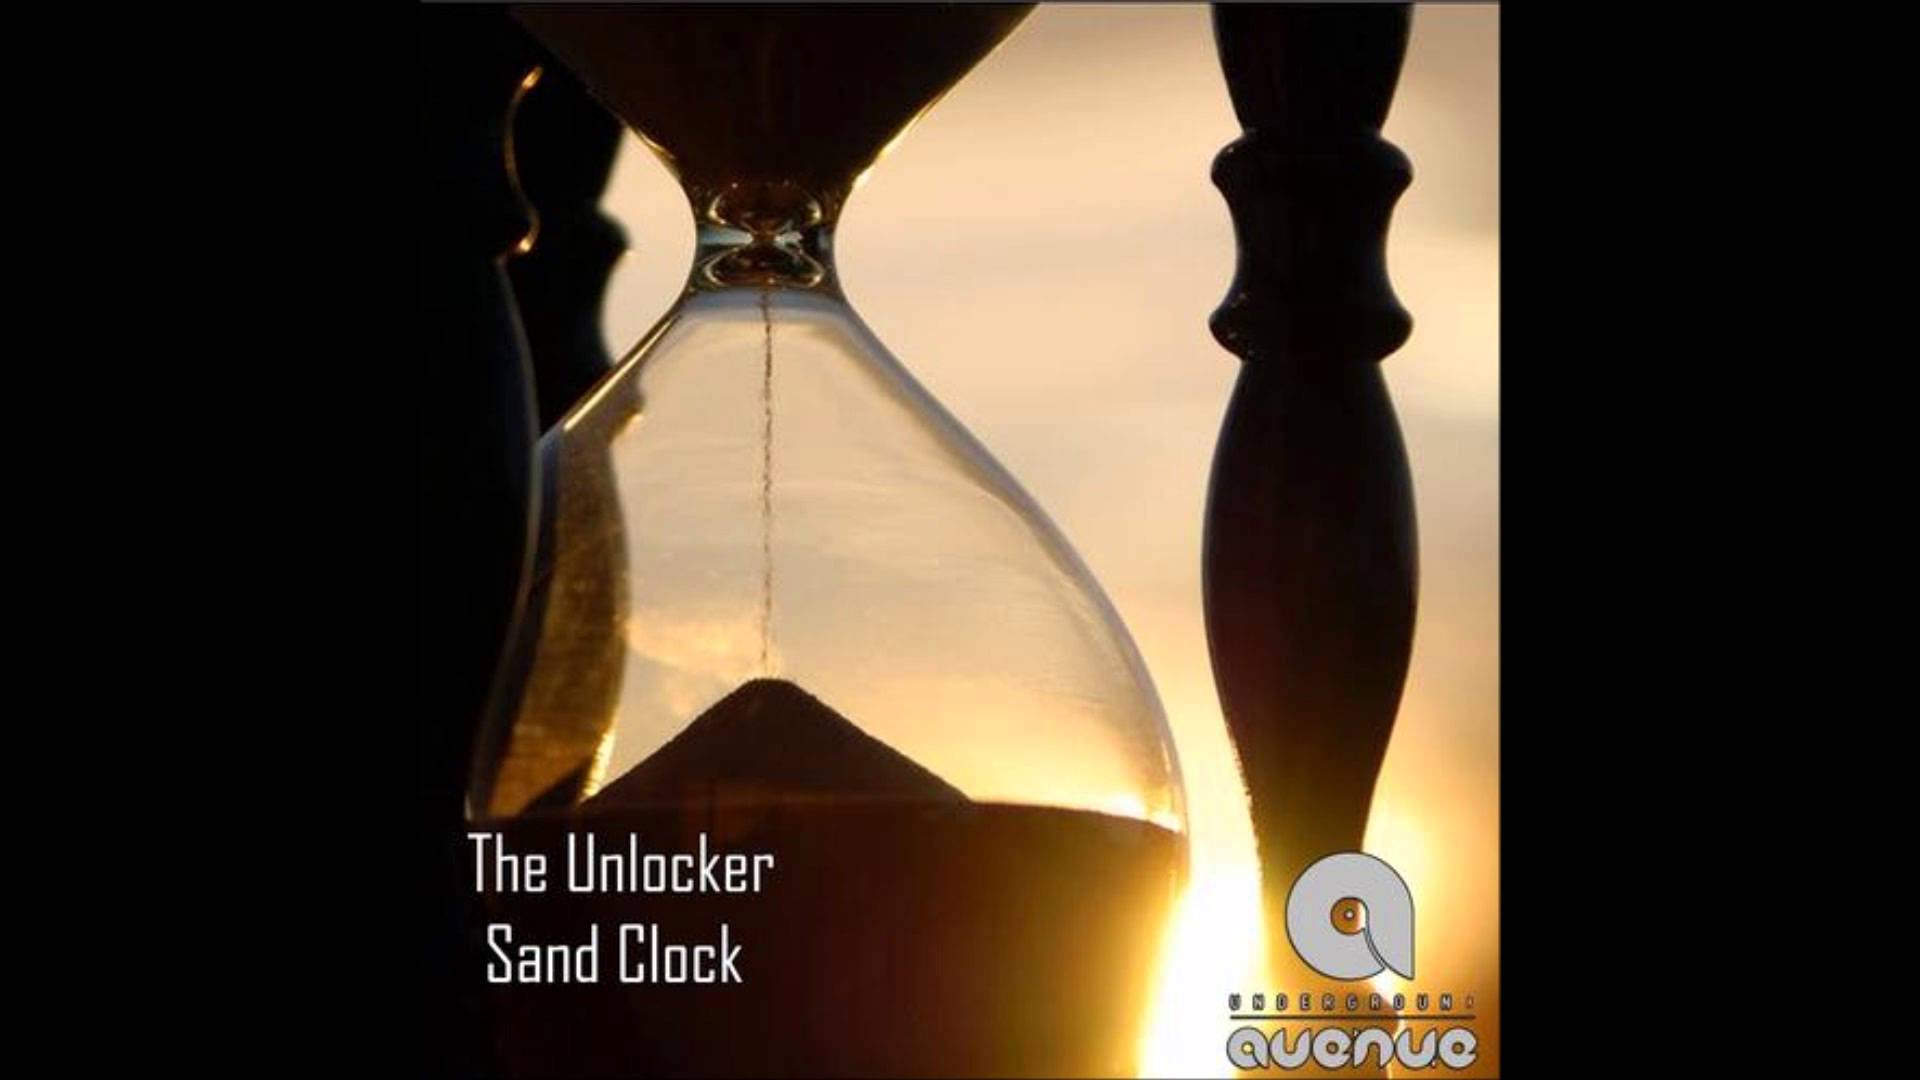 THE UNLOCKER-Sand Clock-(Original Mix).wmv - YouTube